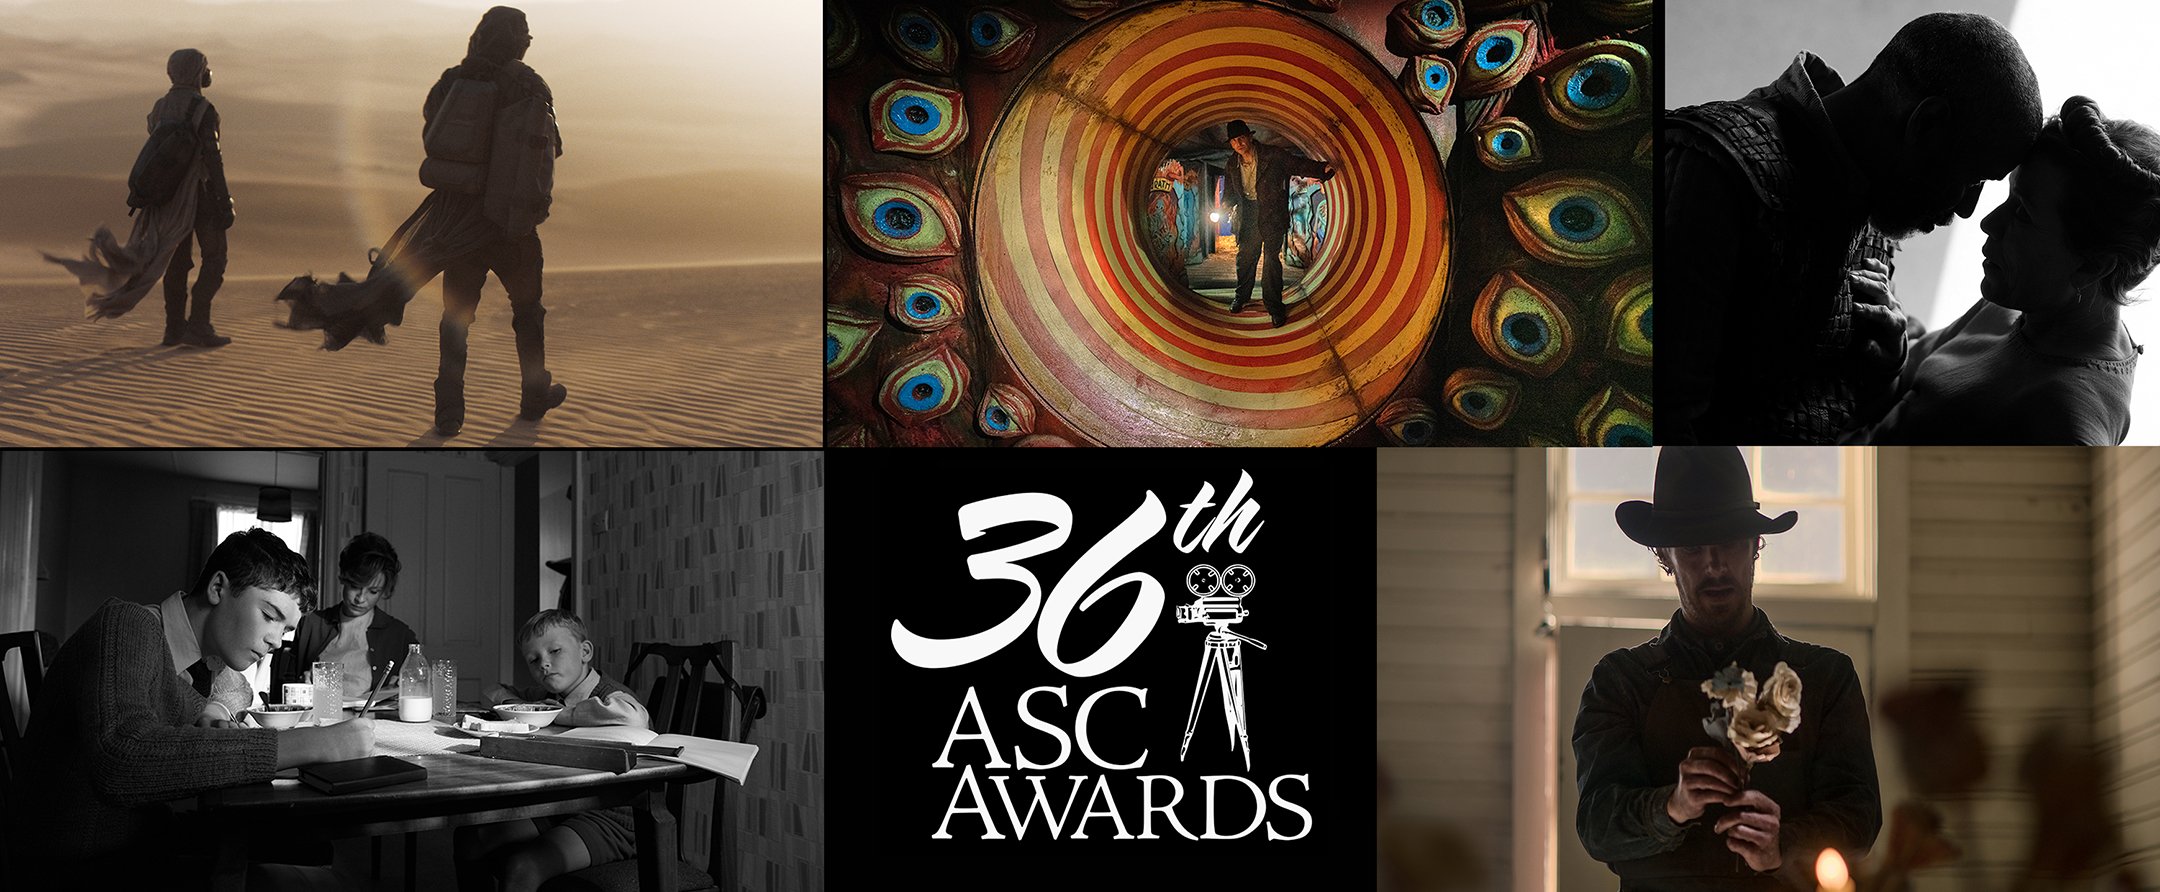 36º ASC Awards